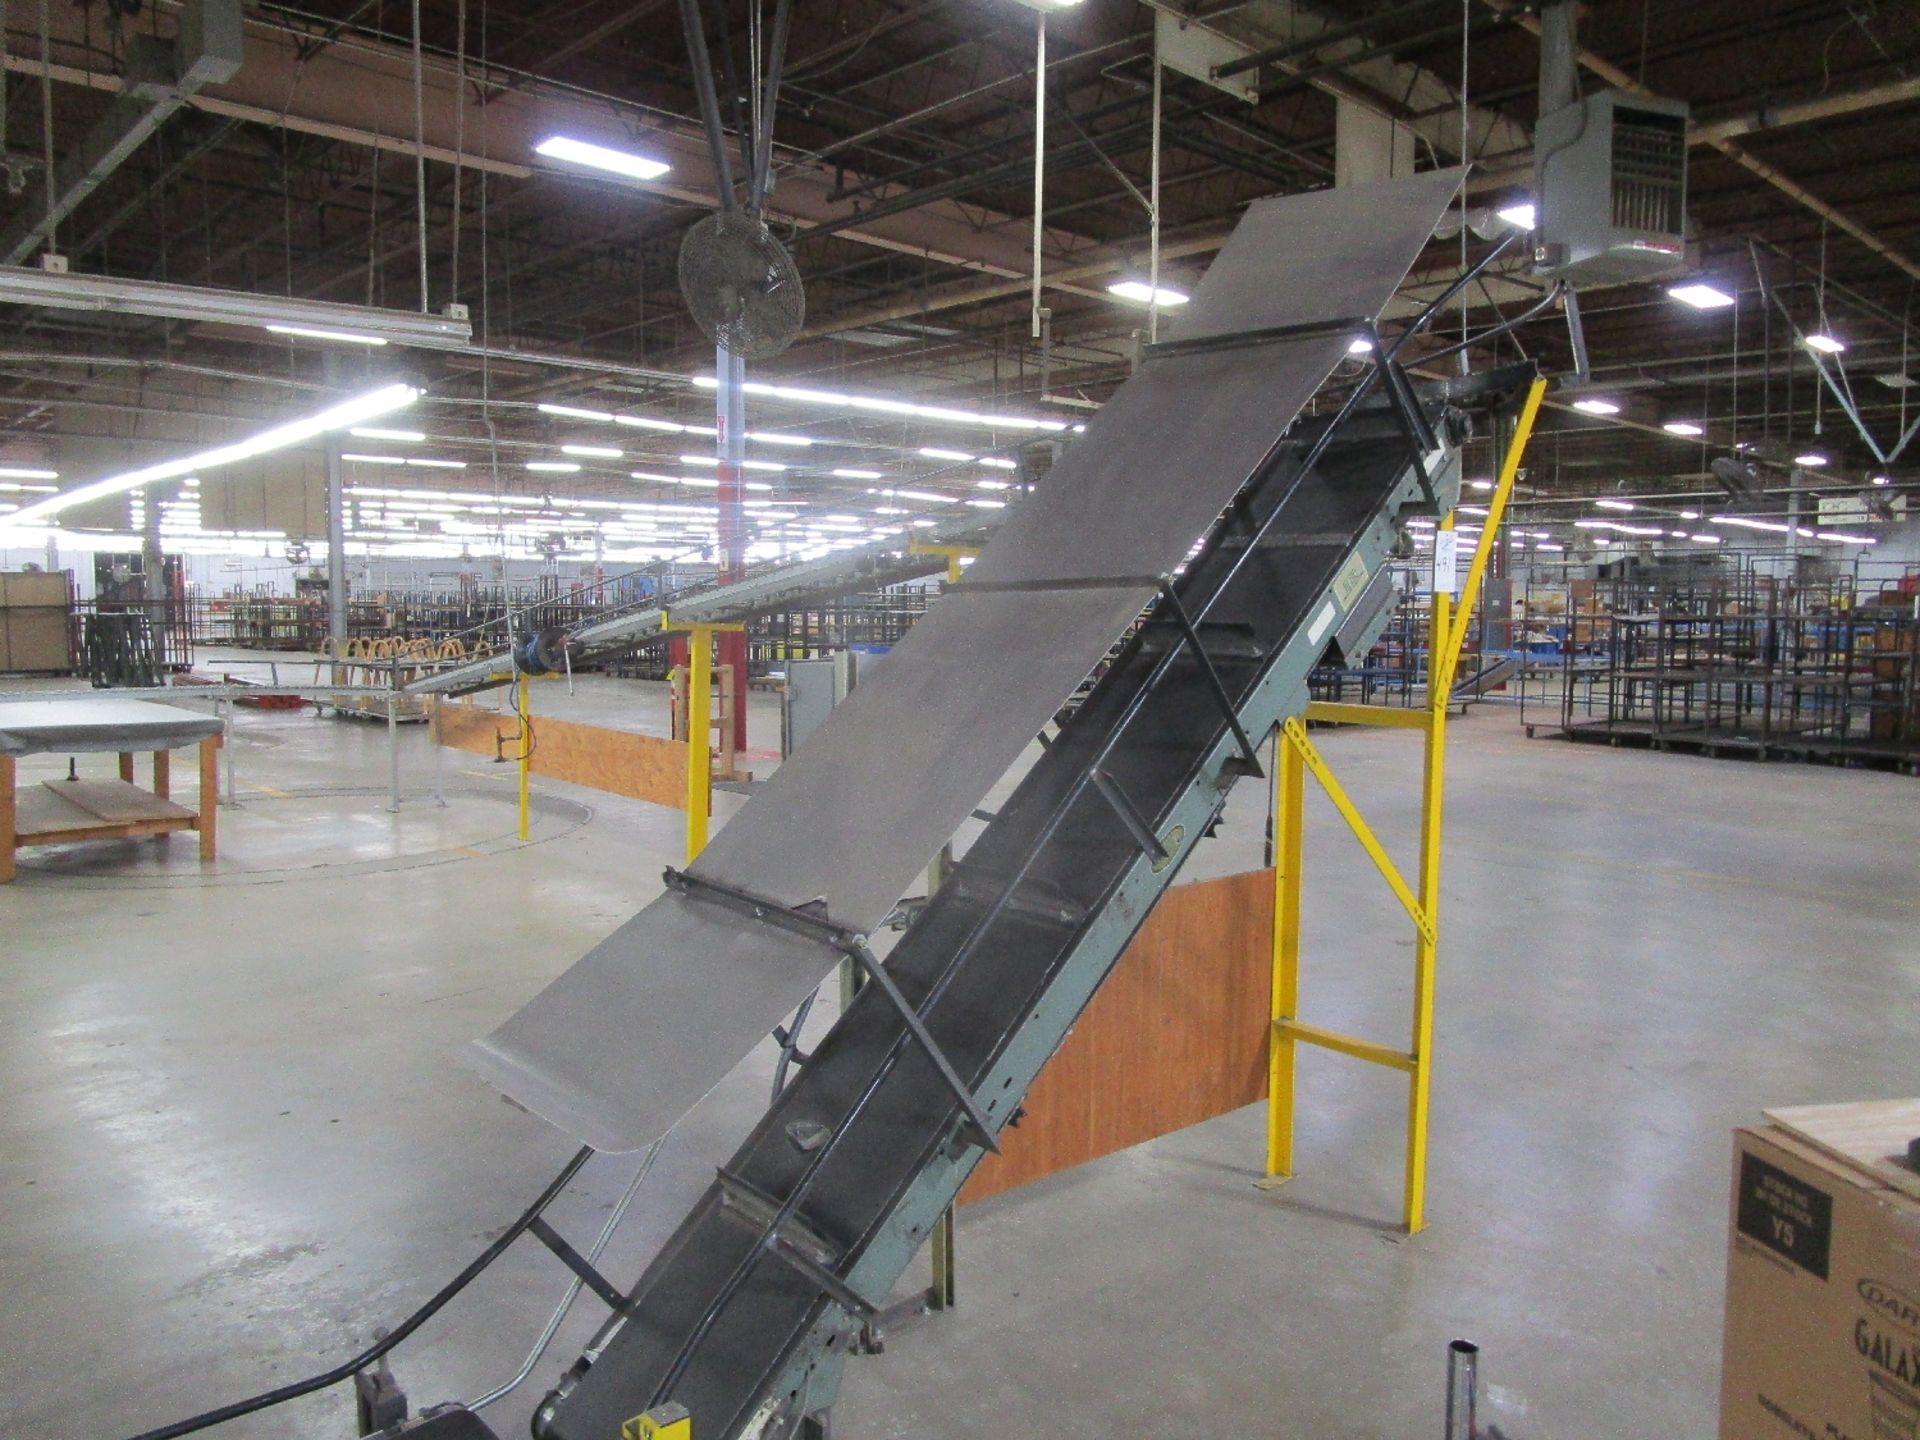 Hytrol Powered Conveyor System Throughout Sewing Department